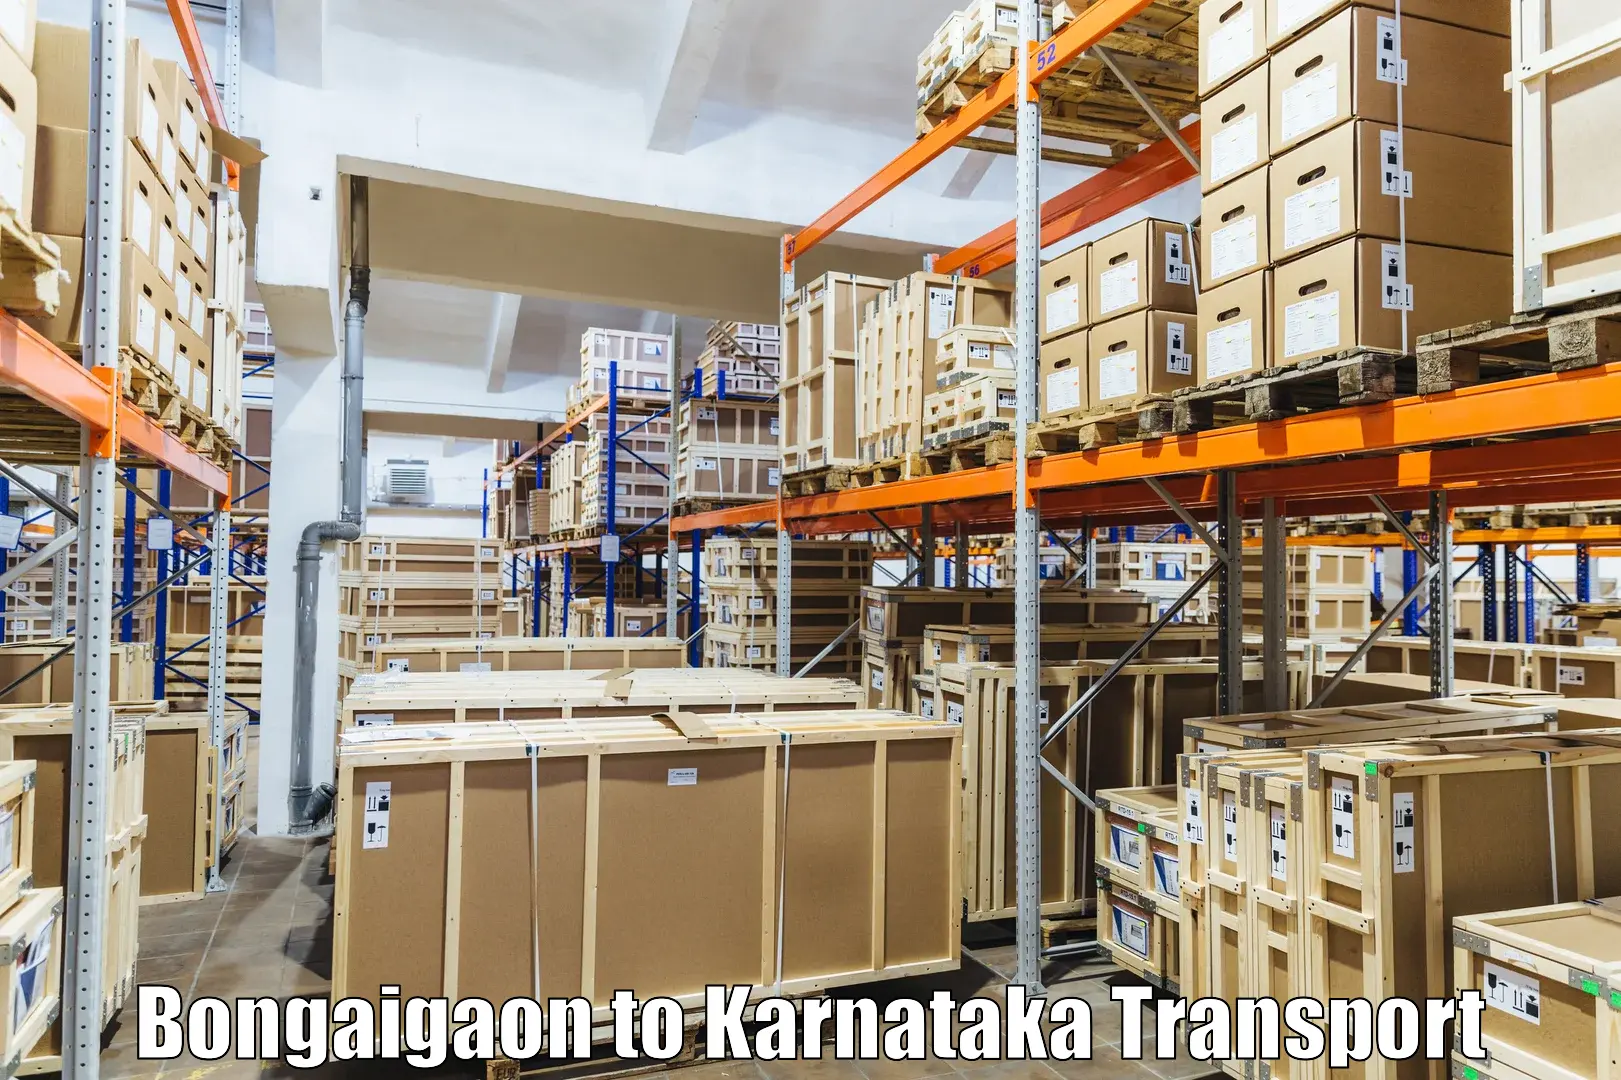 Truck transport companies in India Bongaigaon to Bailhongal